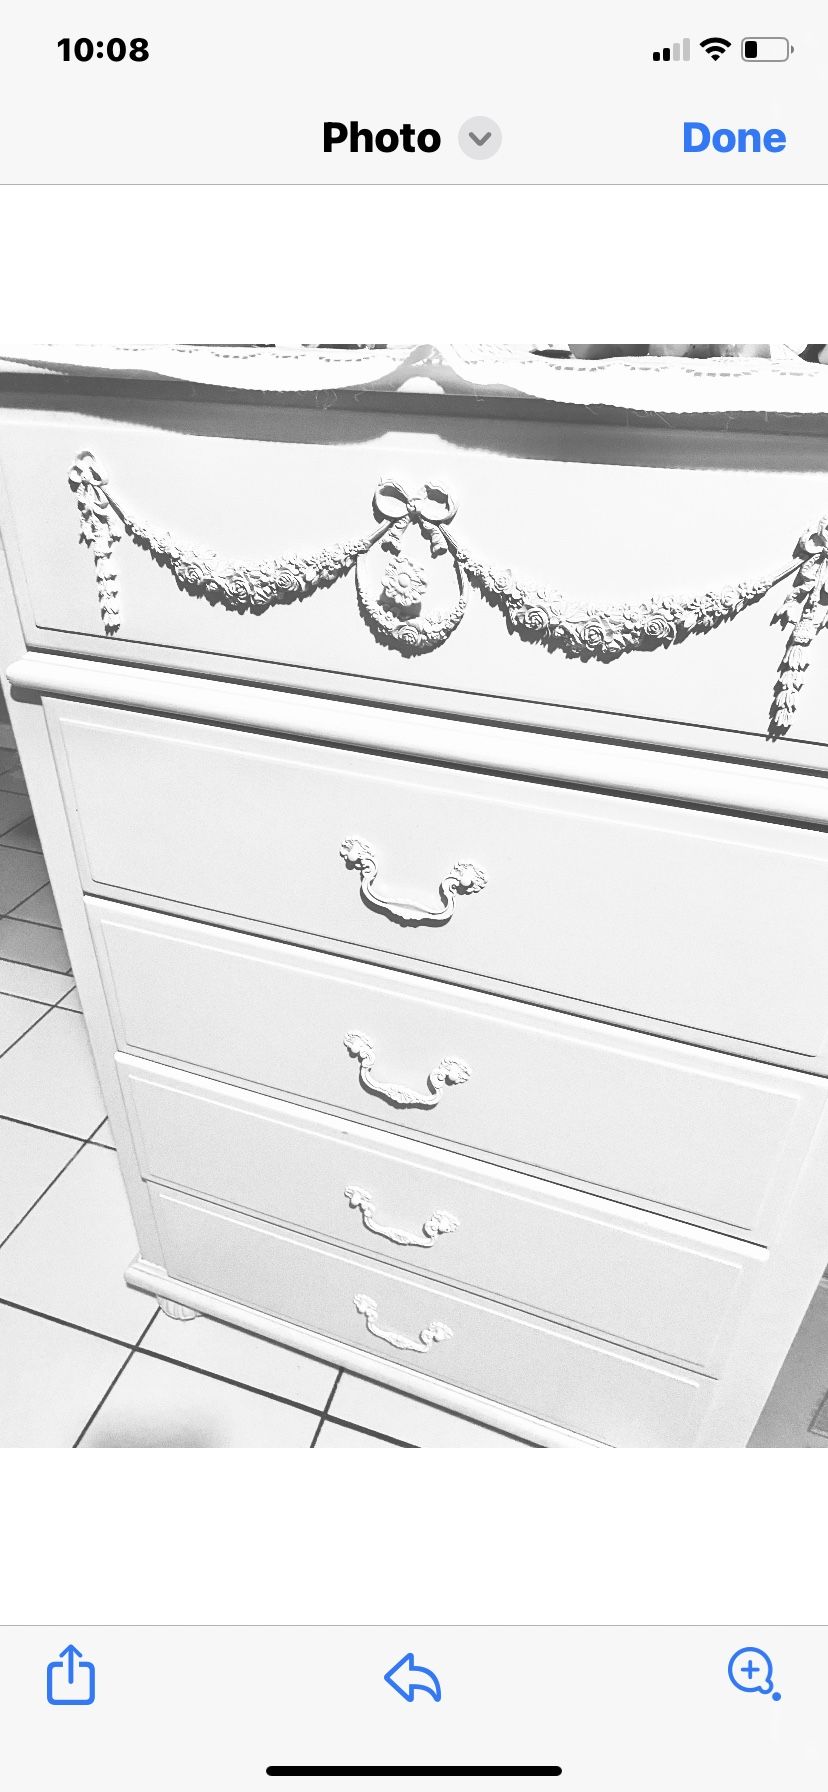 Full White Bedroom Set / Look At Description , Looks Elegant And Vintage, Beautiful, Bright Clean Look